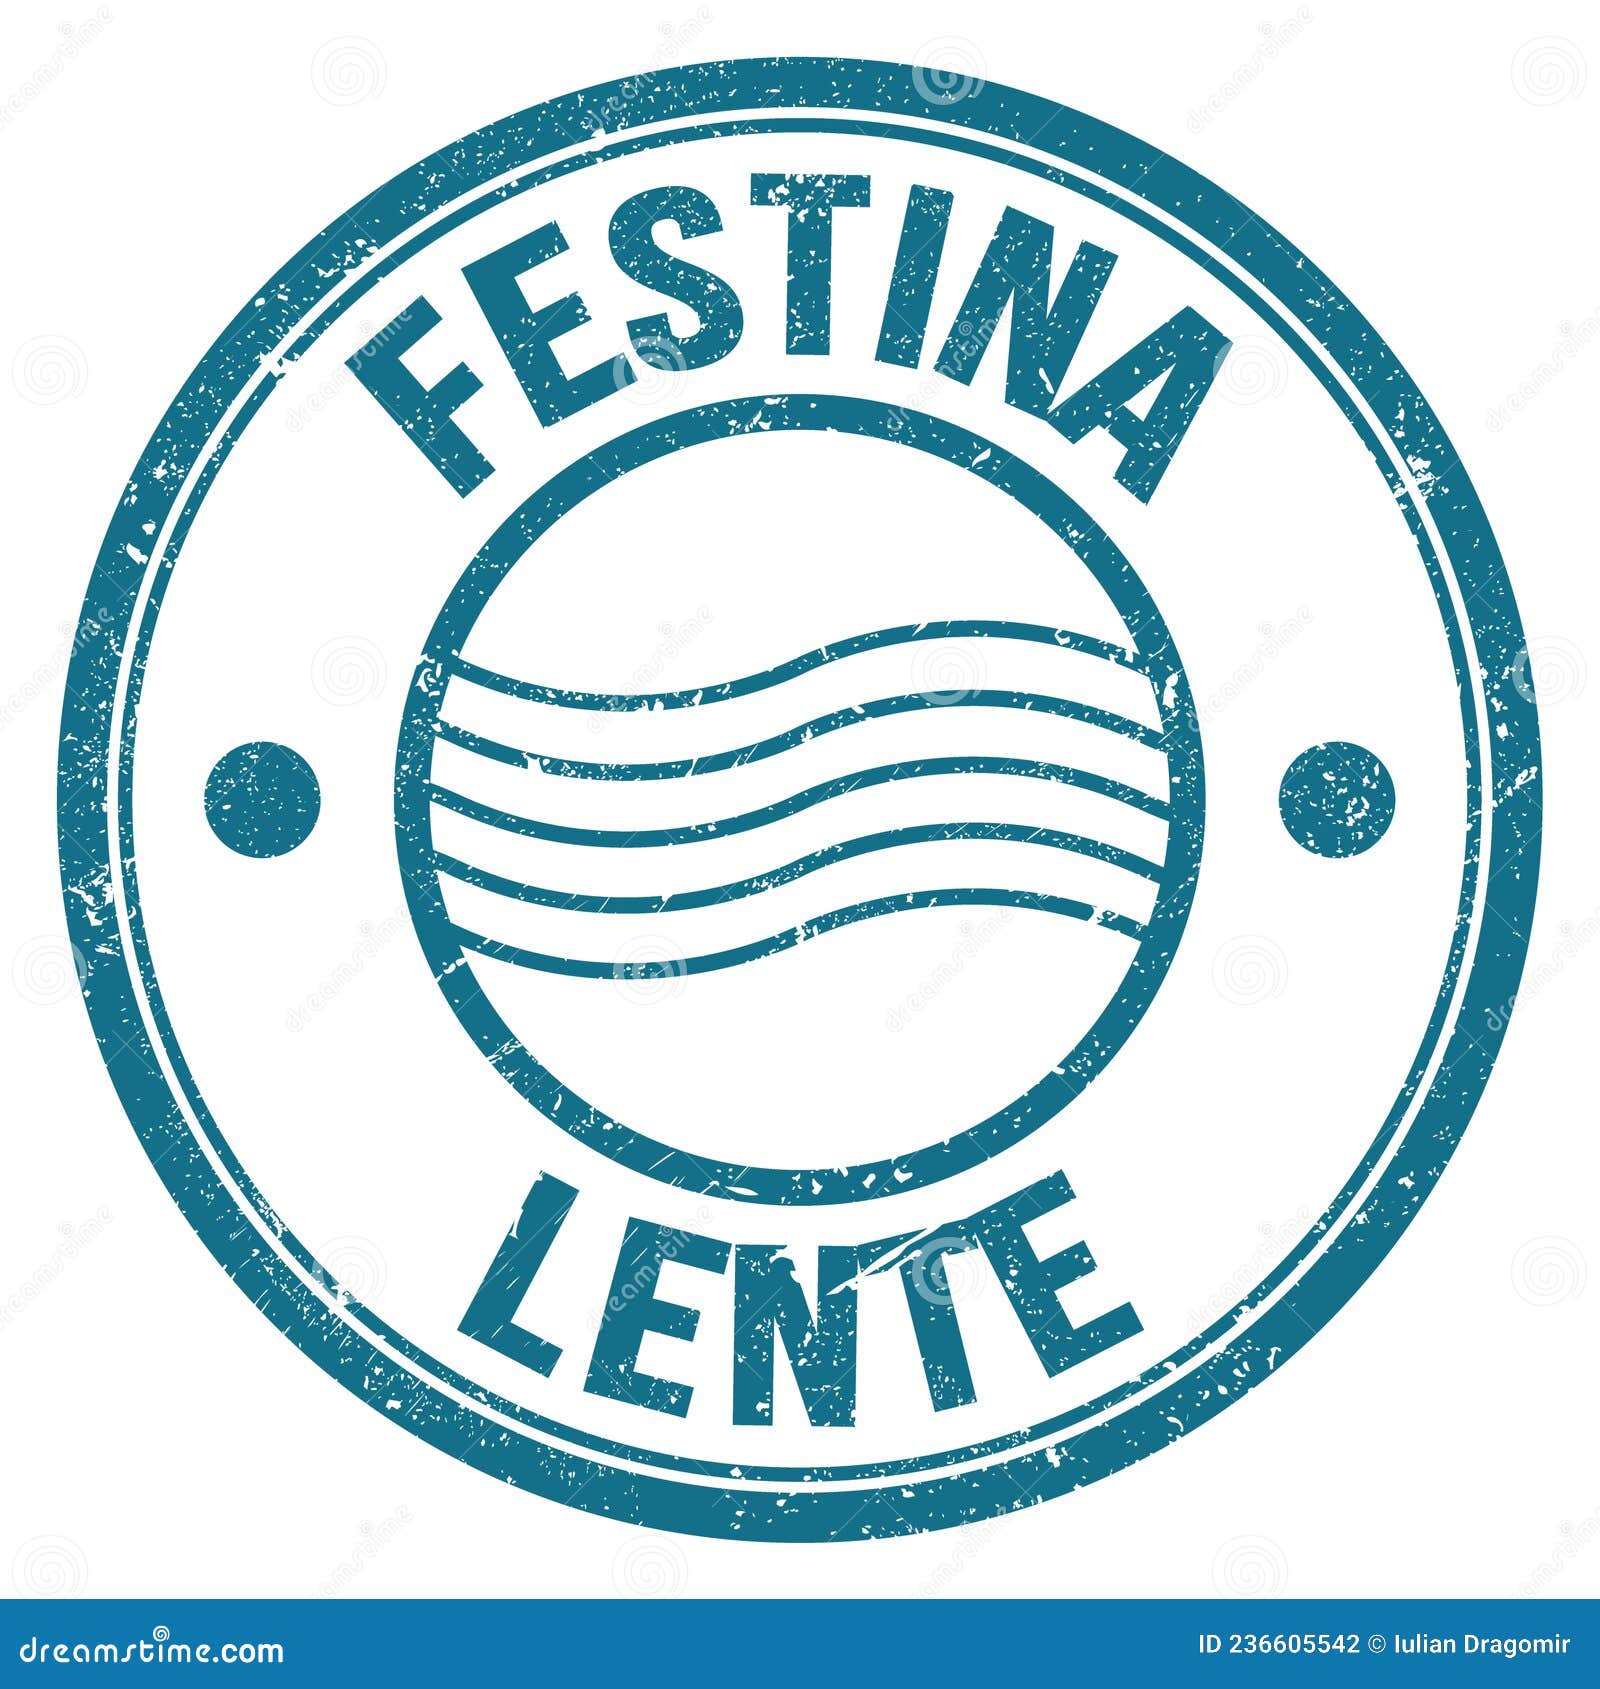 festina lente text on blue round postal stamp sign